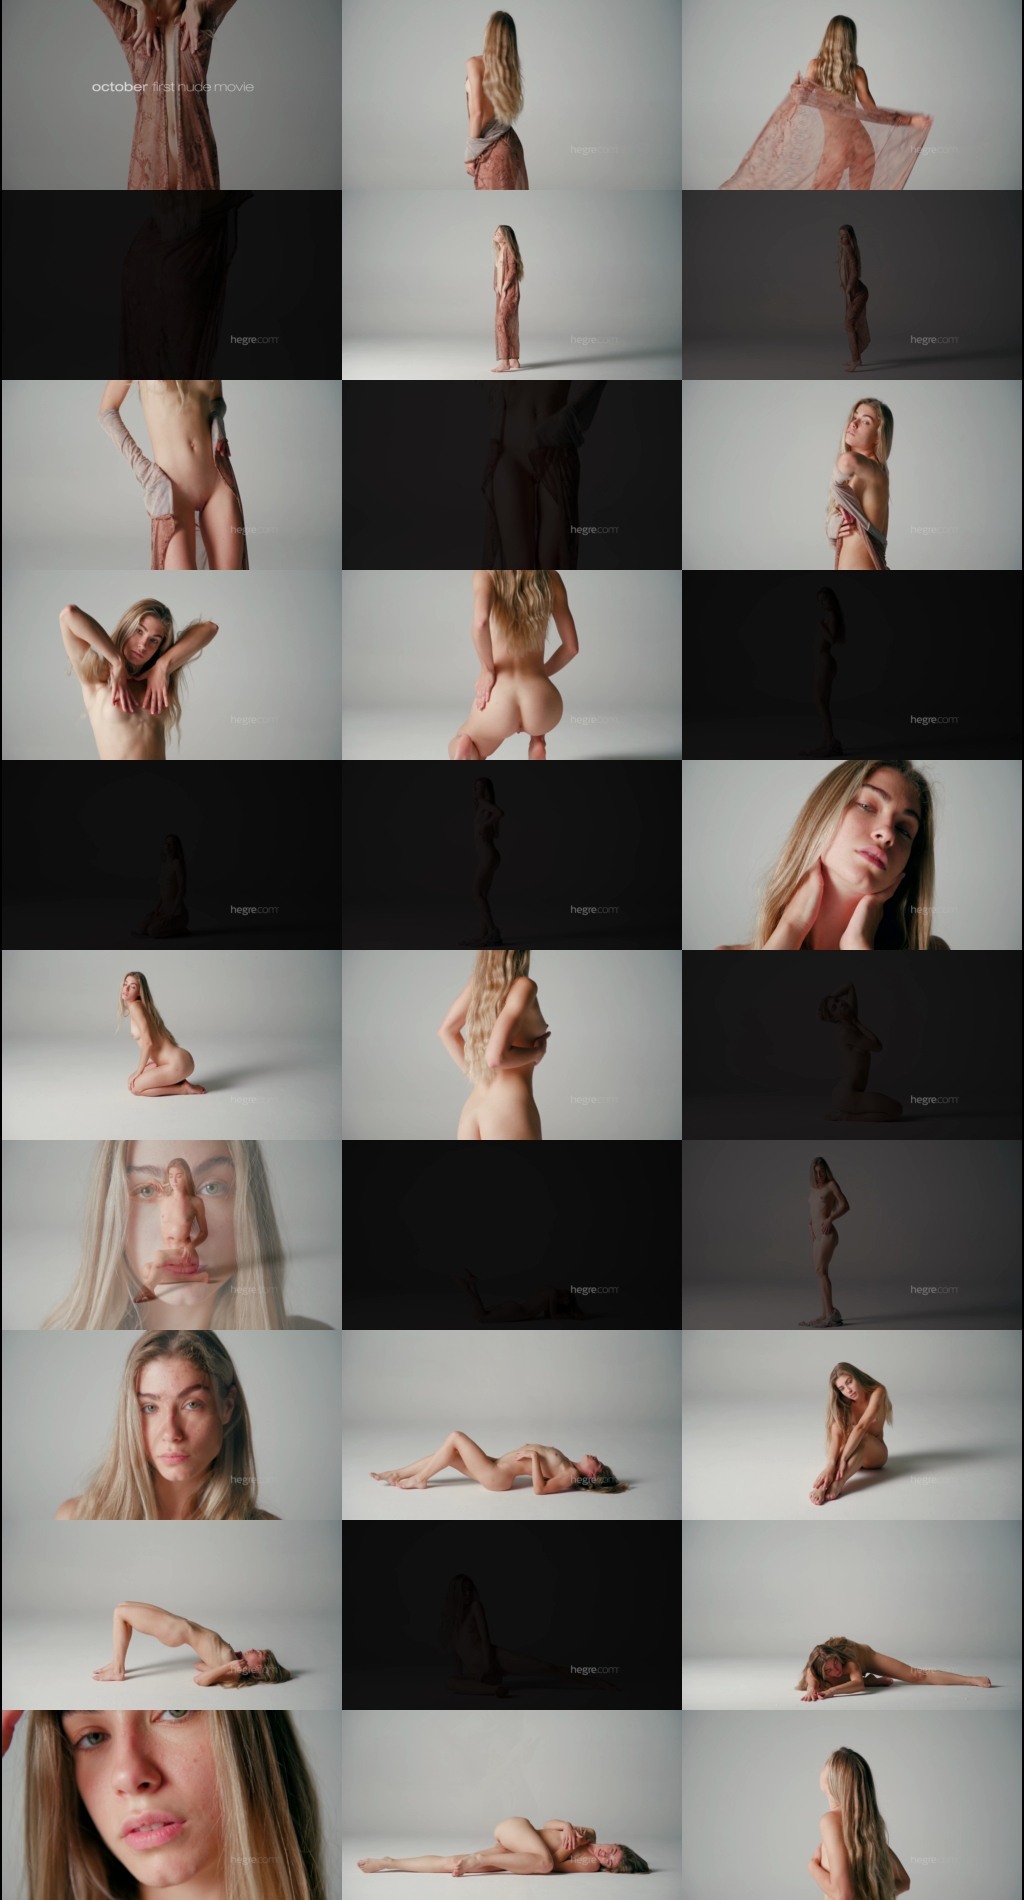 october-first-nude-movie-1080p.jpeg